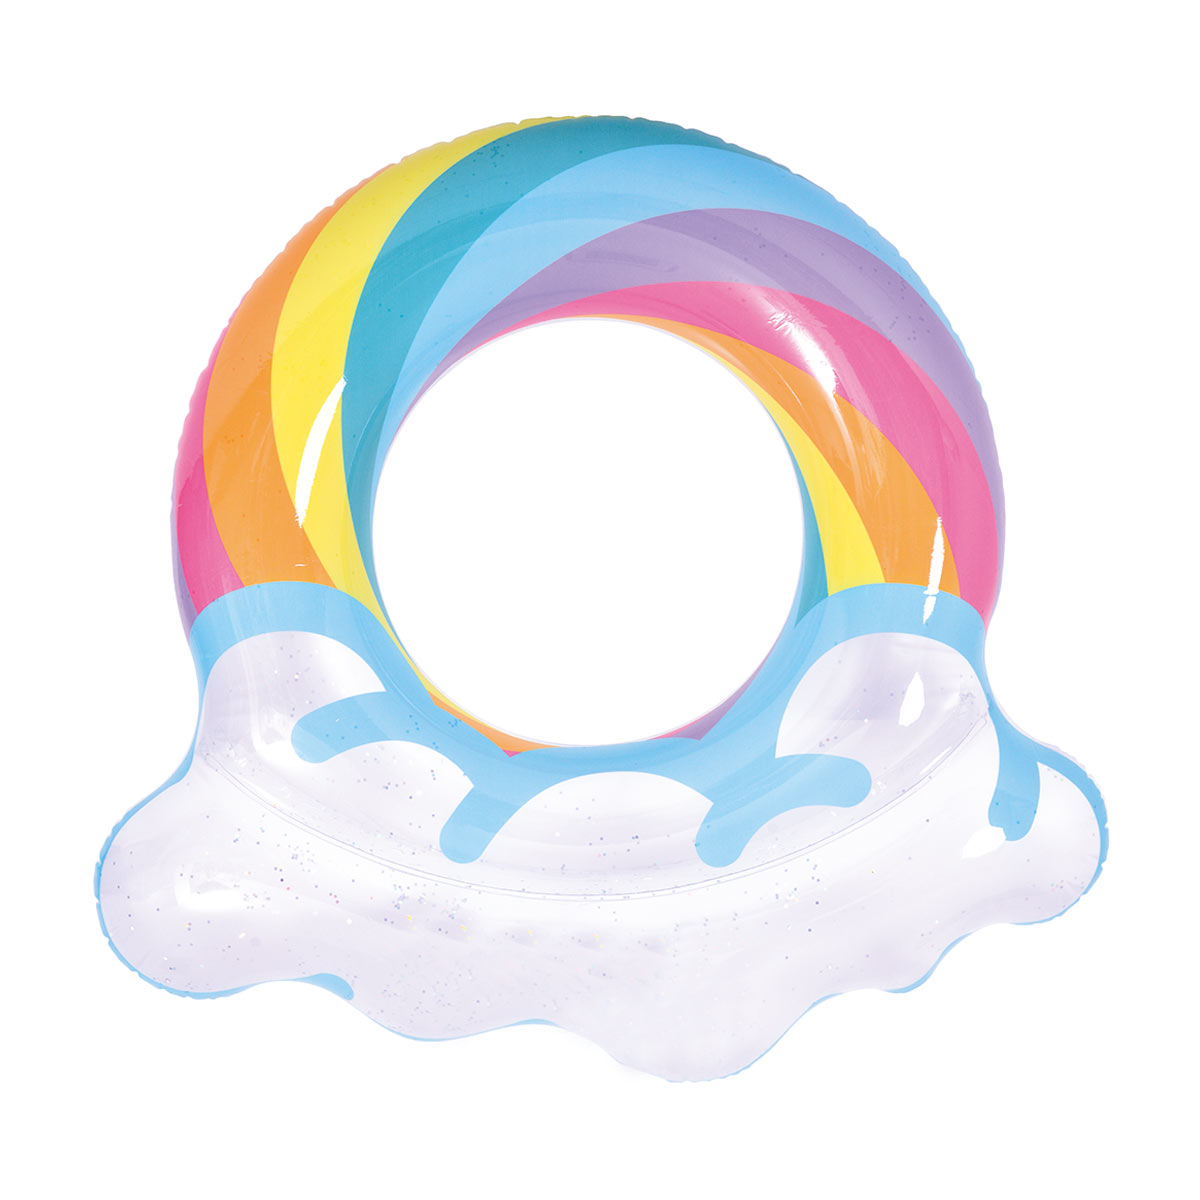 Inflatable Outdoor Swim Ring, Glitter Rainbow